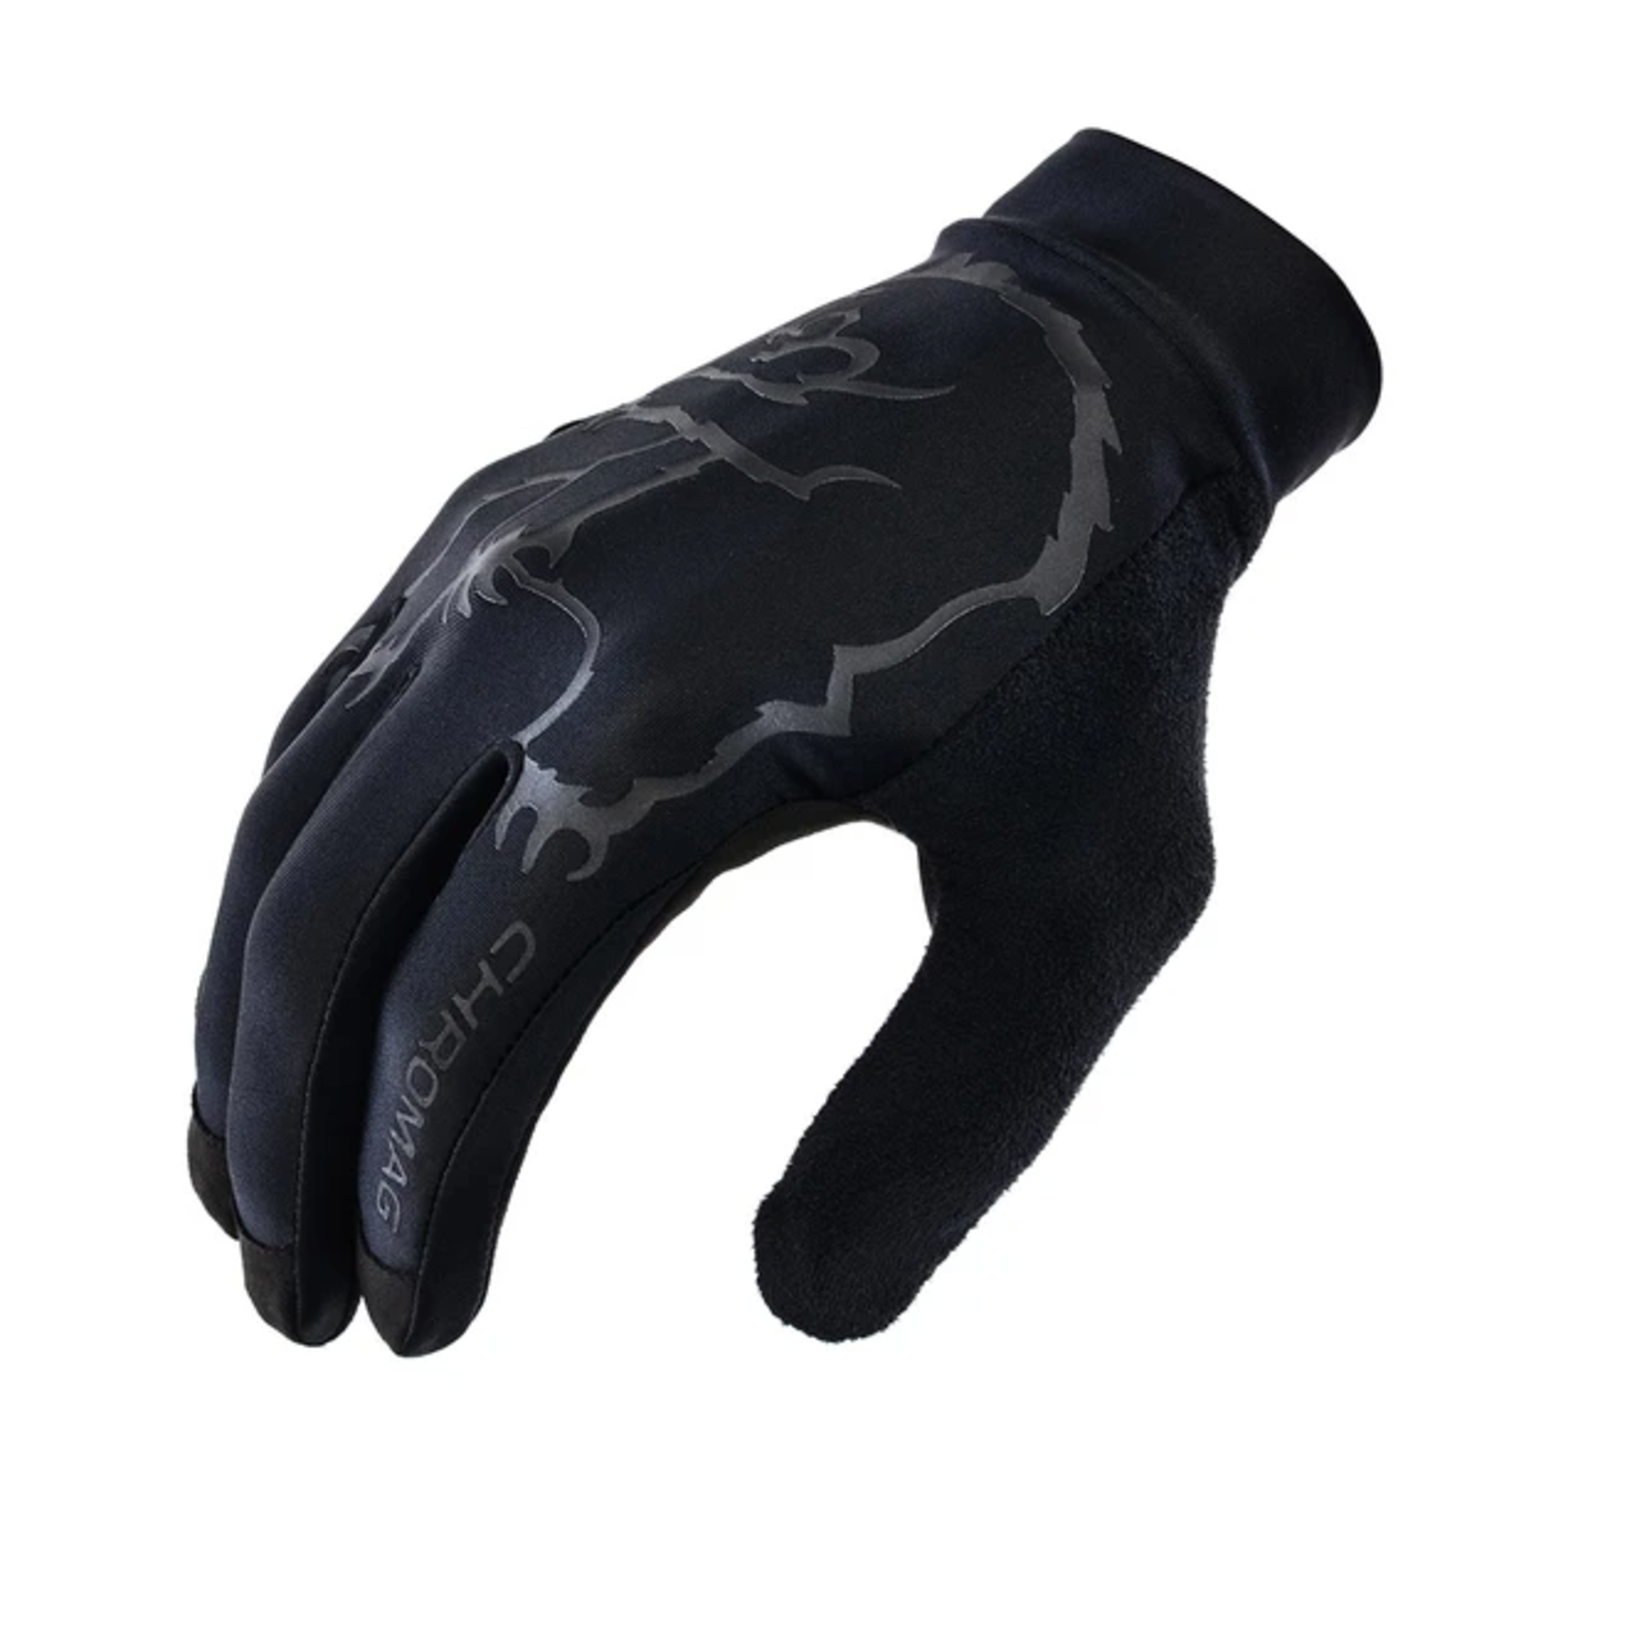 Chromag Chromag Habit Glove